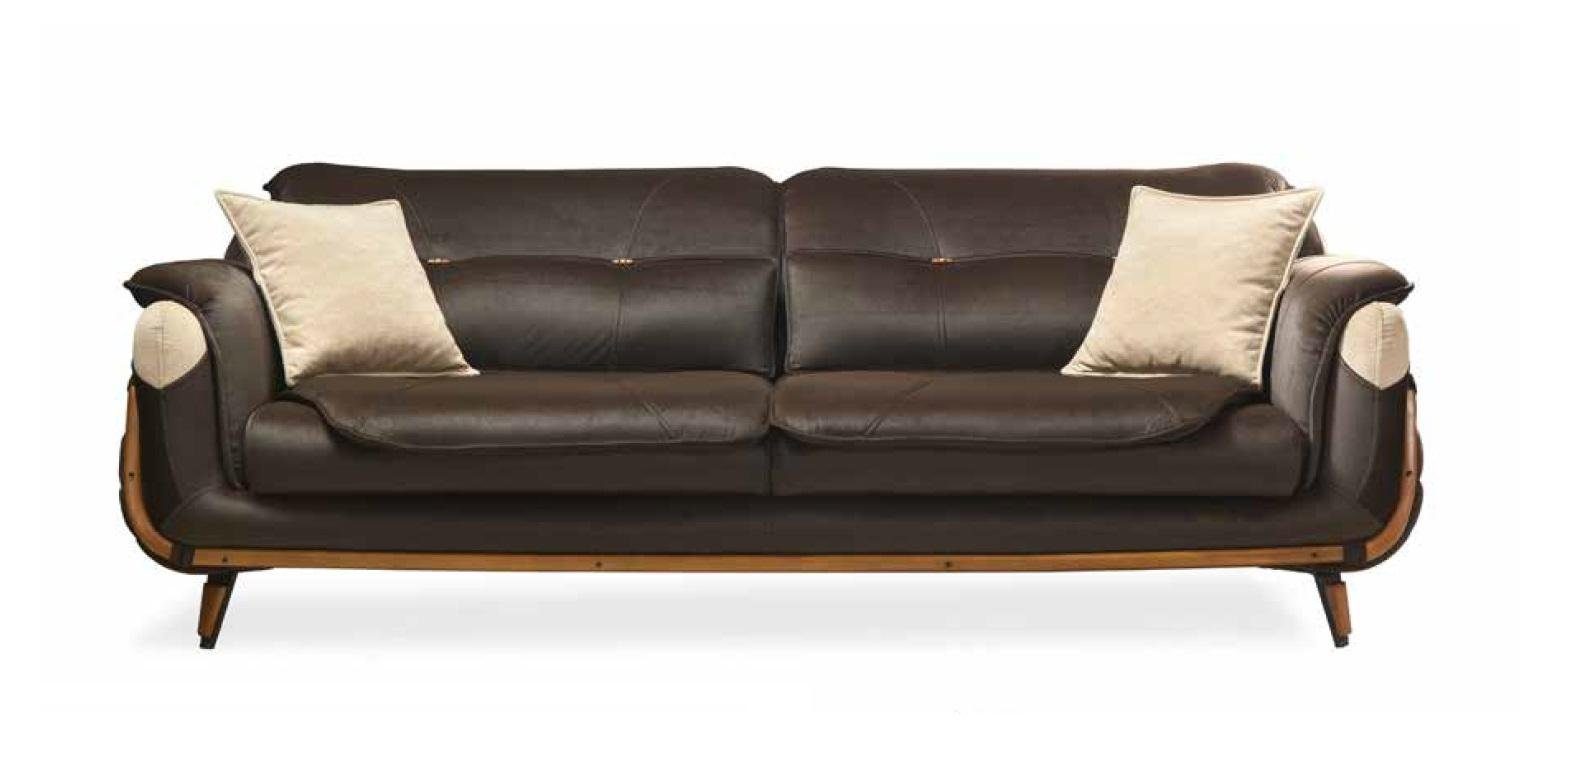 JVmoebel Sofa Sofa Möbel Dreisitzer Sofas Klassisches Stoff Couch Luxus Polster, Made in Europe